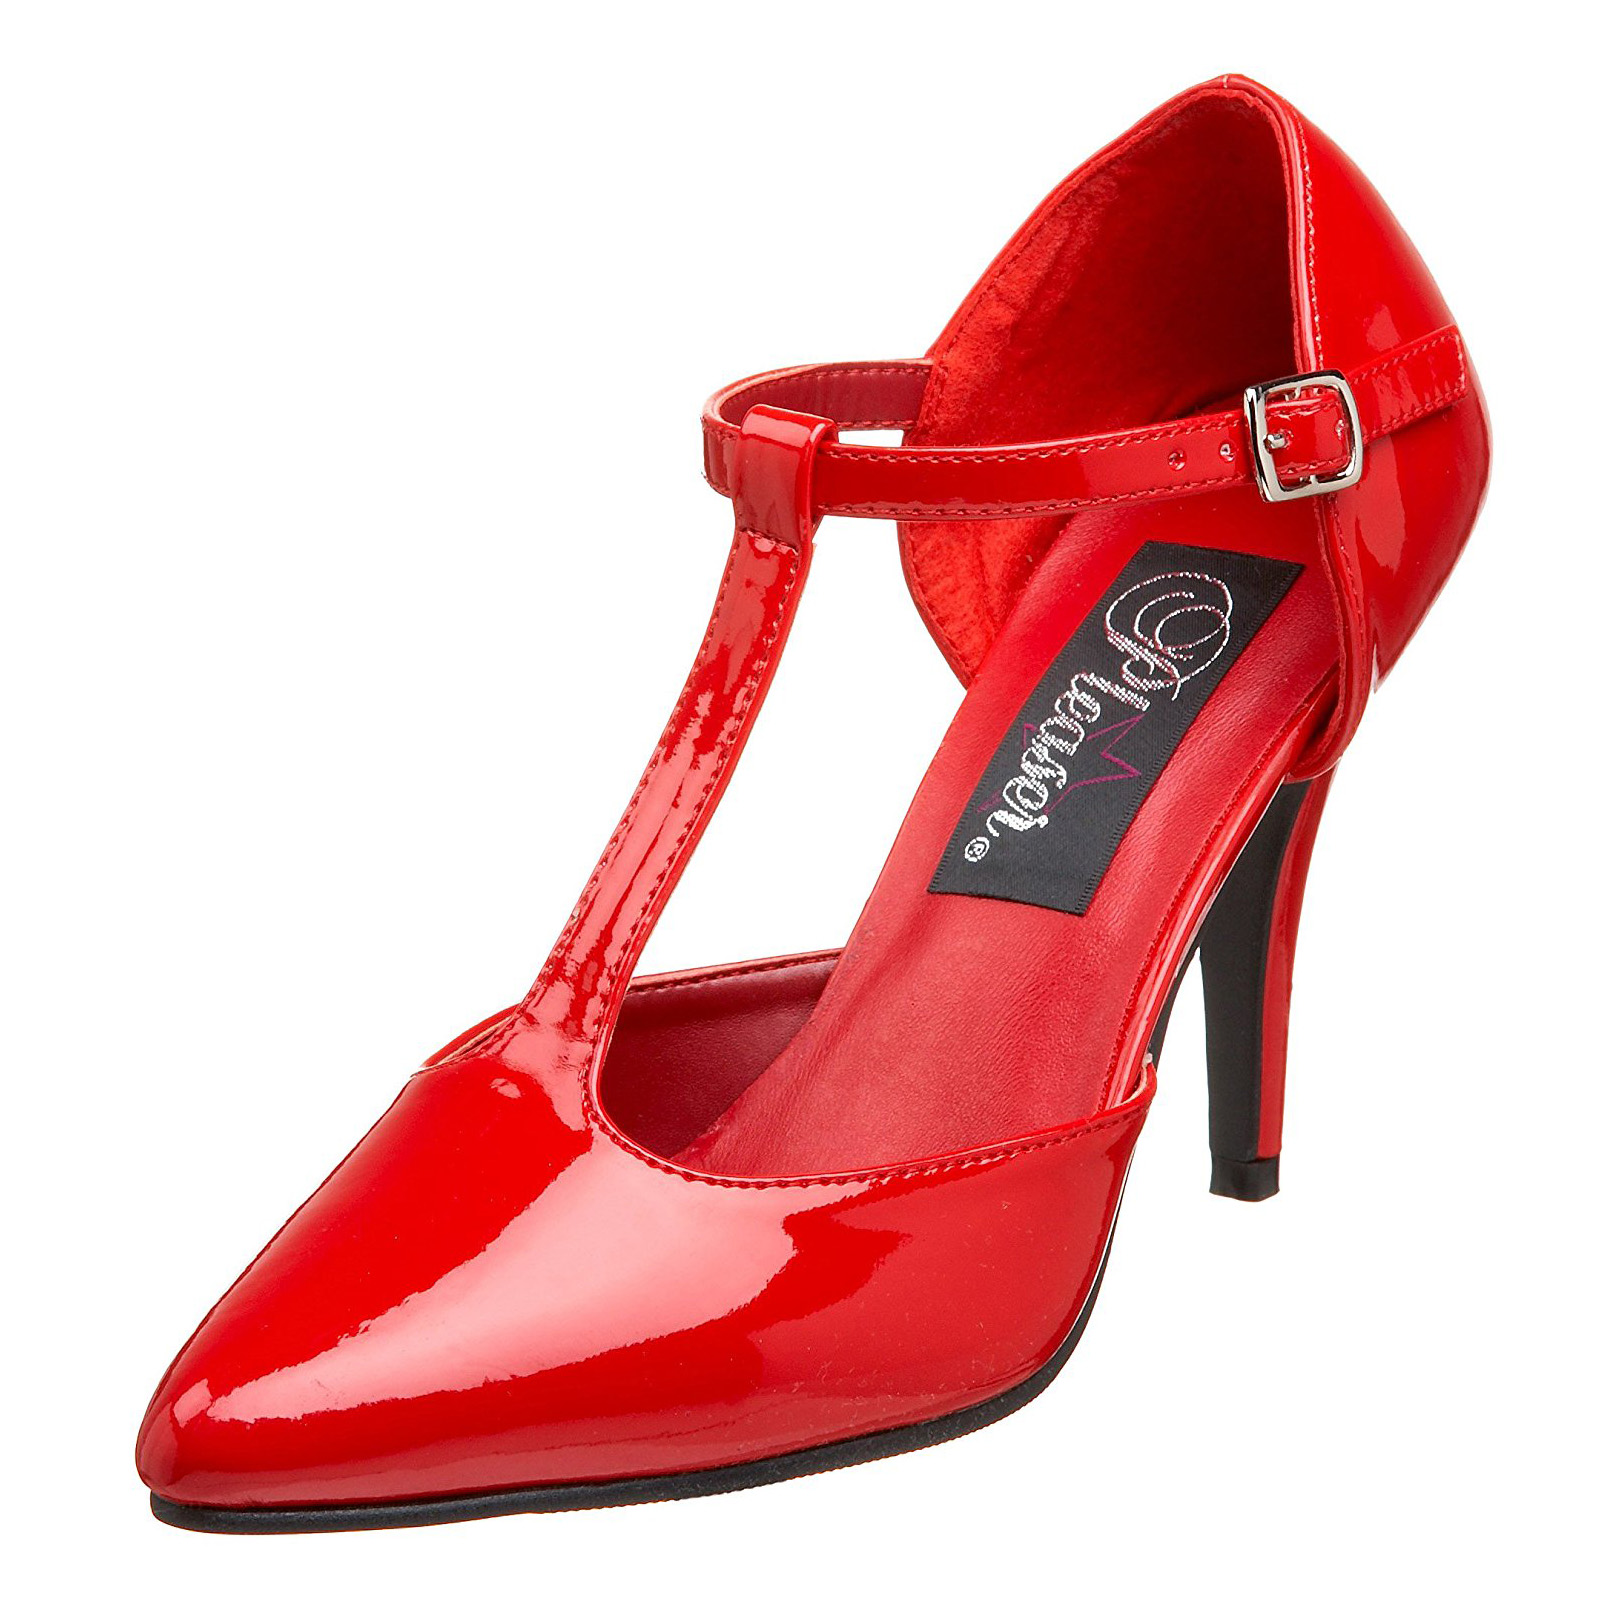 high heels for men Archives - Nooshoes